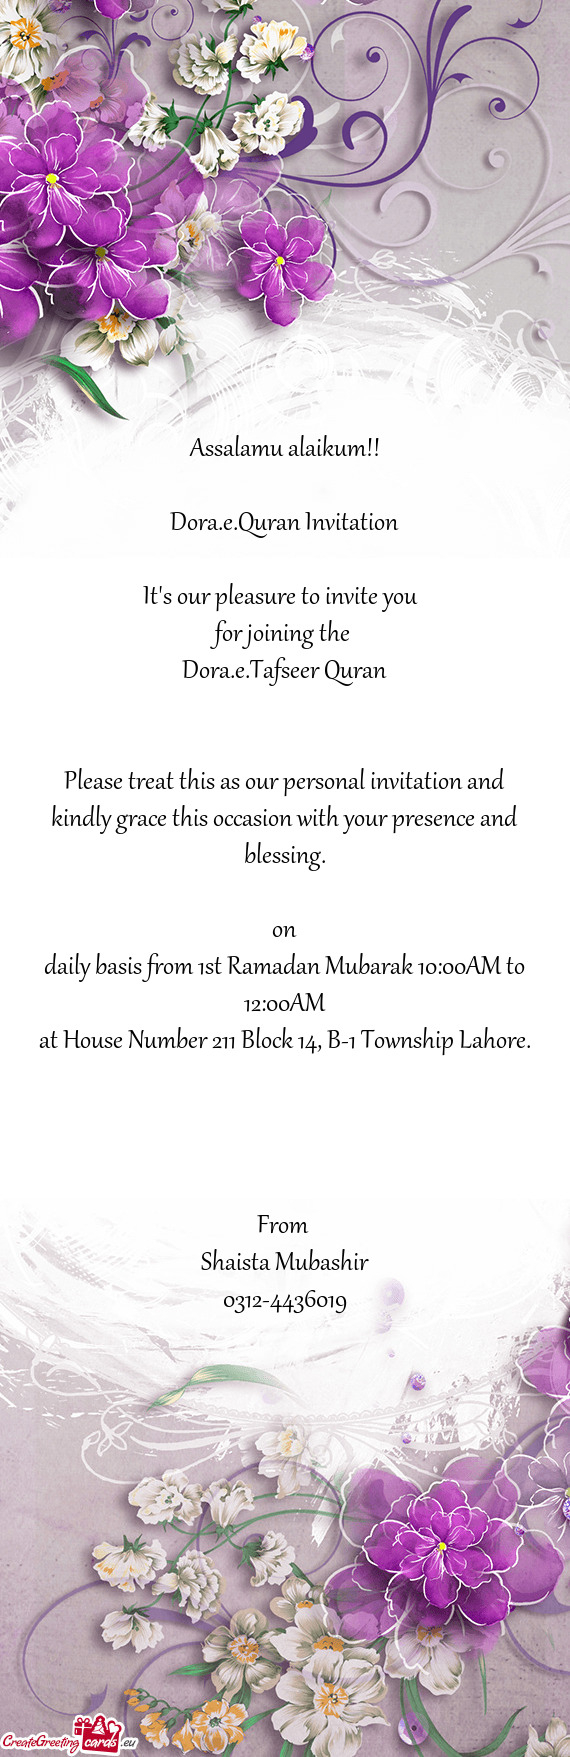 Daily basis from 1st Ramadan Mubarak 10:00AM to 12:00AM